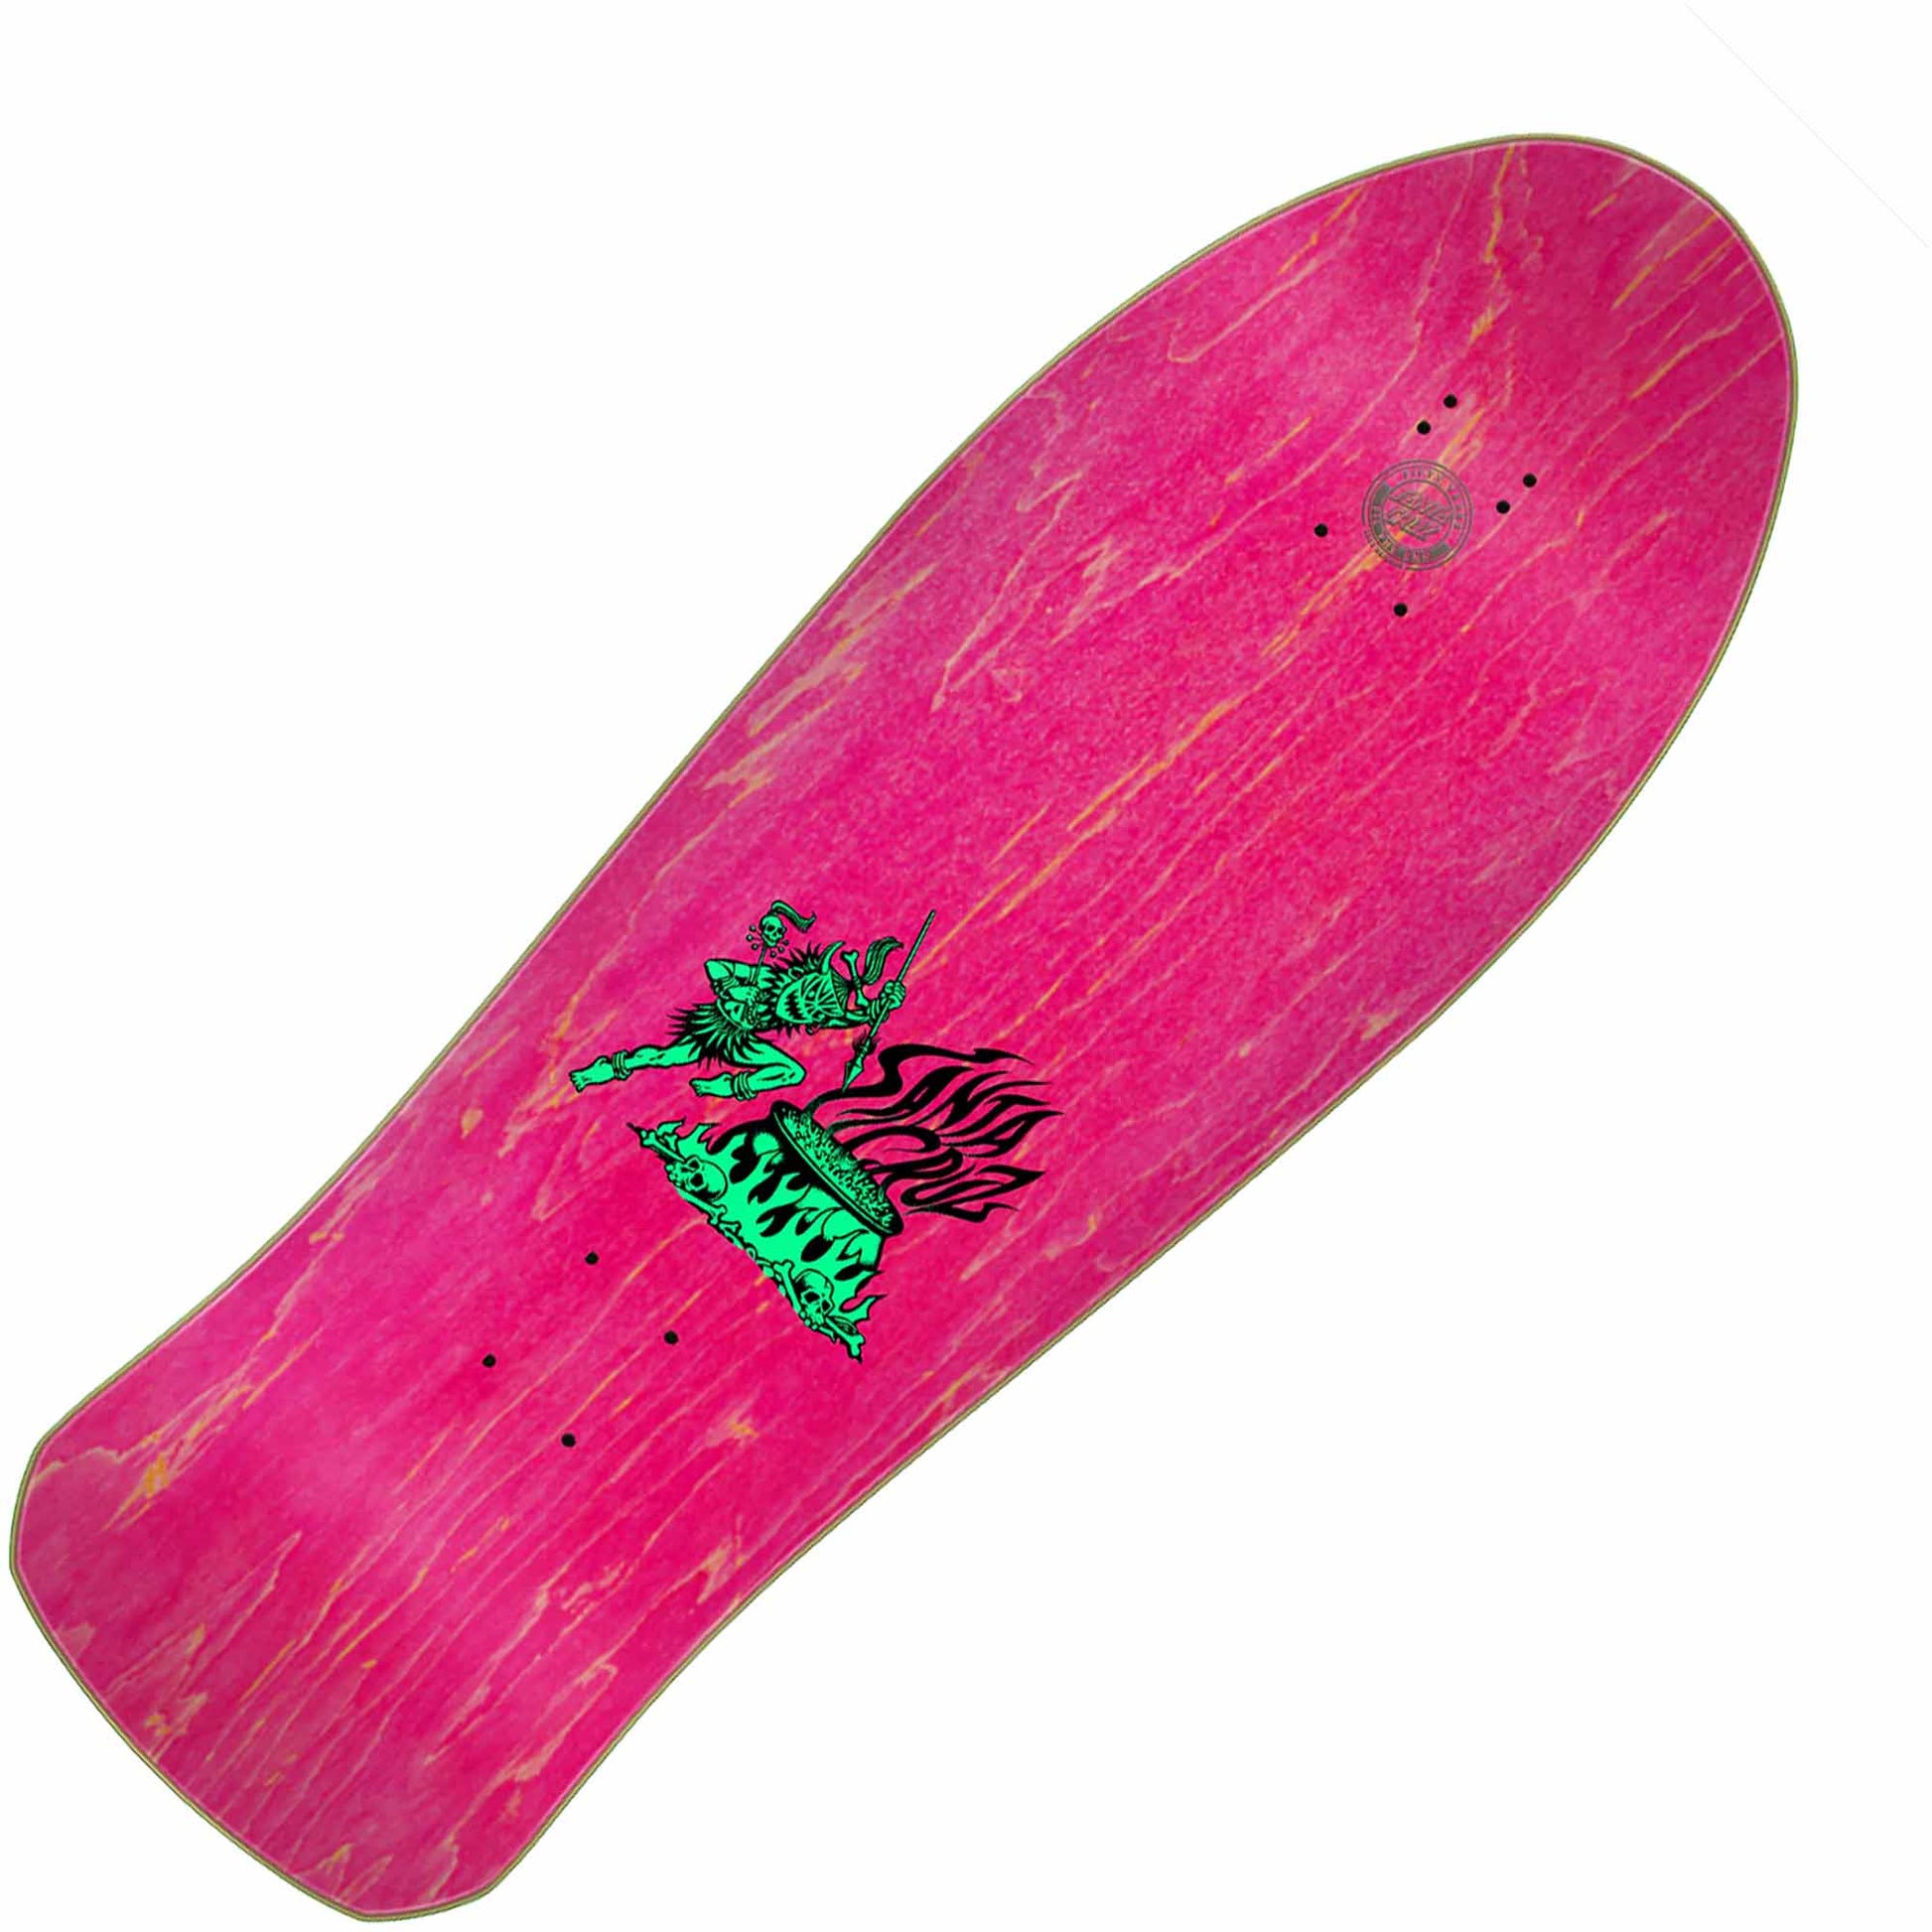 Santa Cruz Salba Tiger reissue deck (10.3" x 31.1") - Tiki Room Skateboards - 2